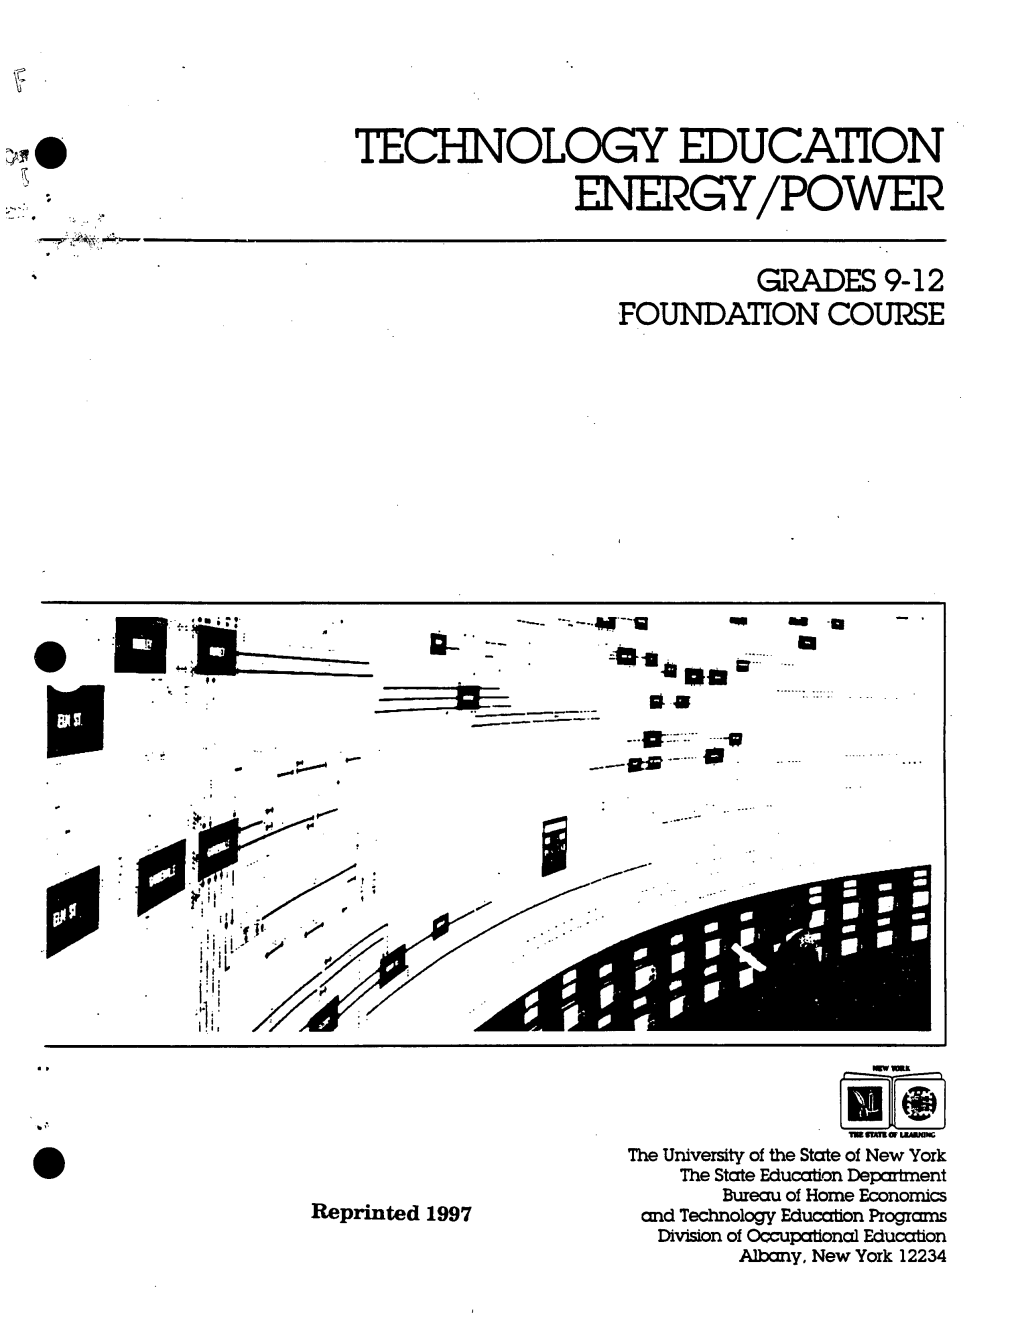 Technology Education Energy/Power